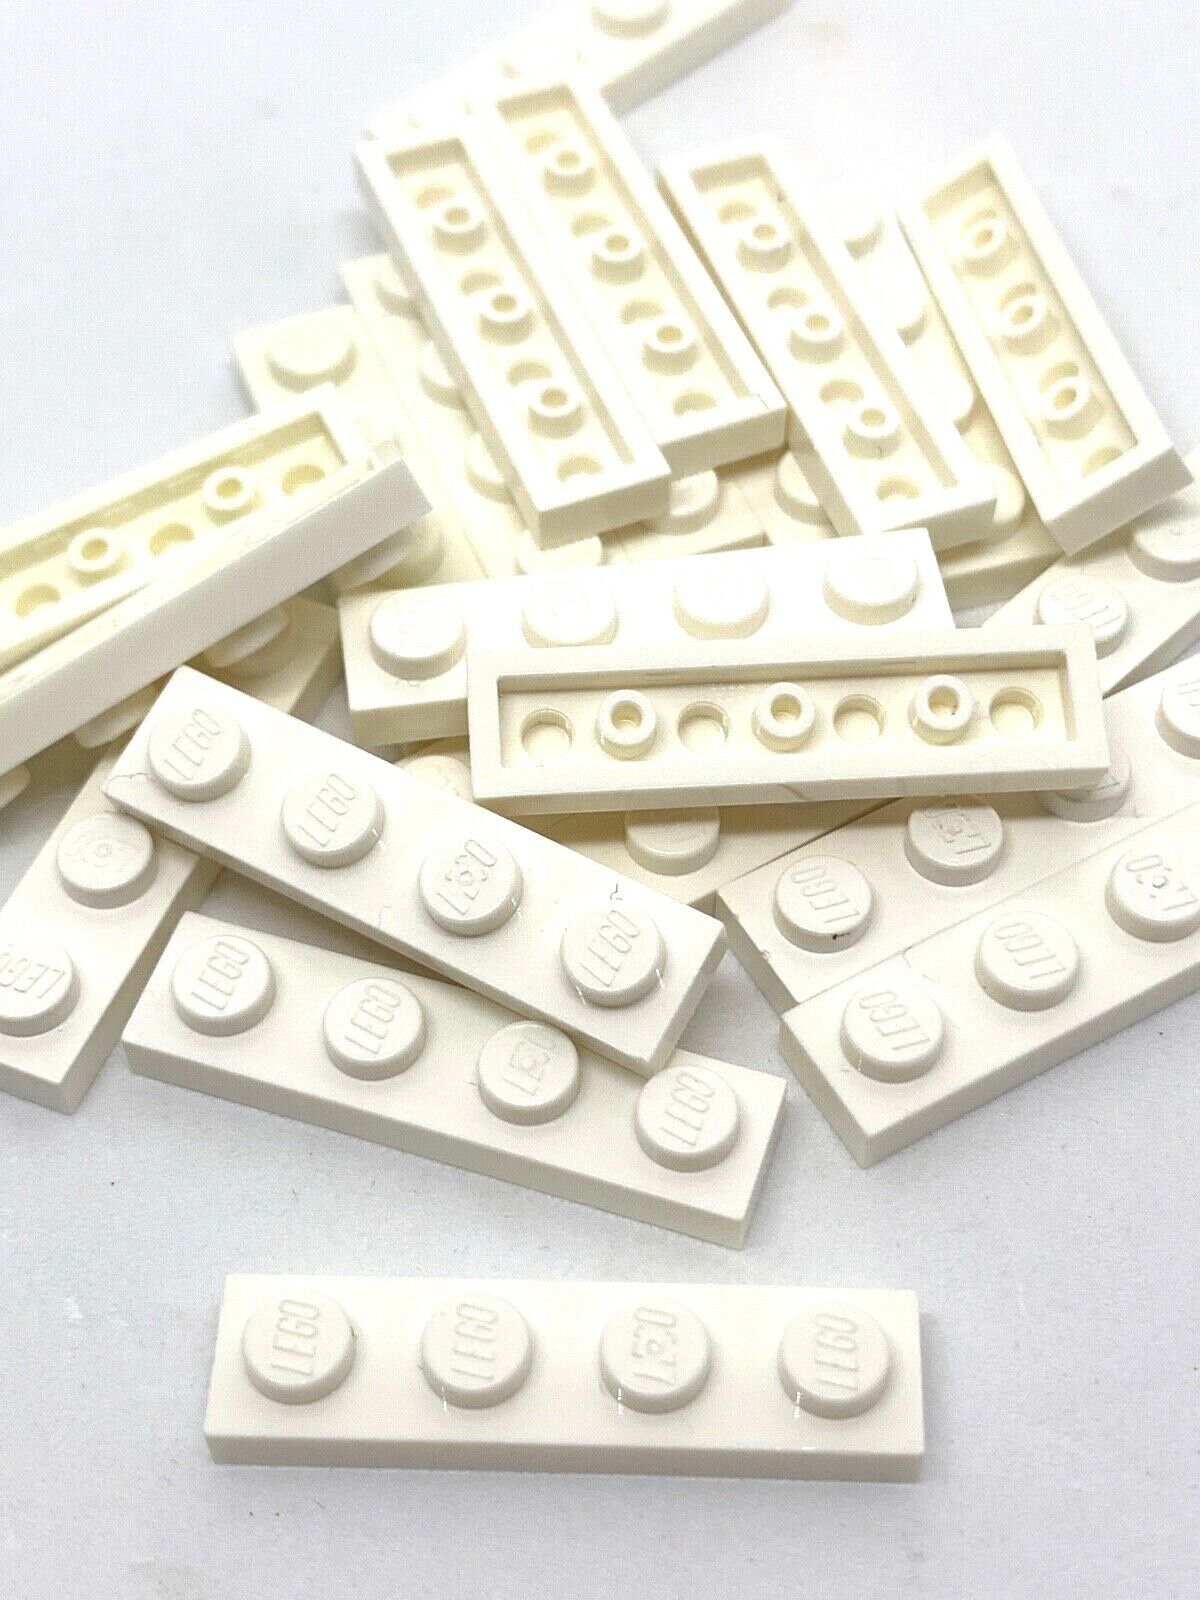 1X4 Lego 25 Piece Bulk Lot 1 x 4 Flat Plates WHITE Building Parts #3710 LEGO Does Not Apply